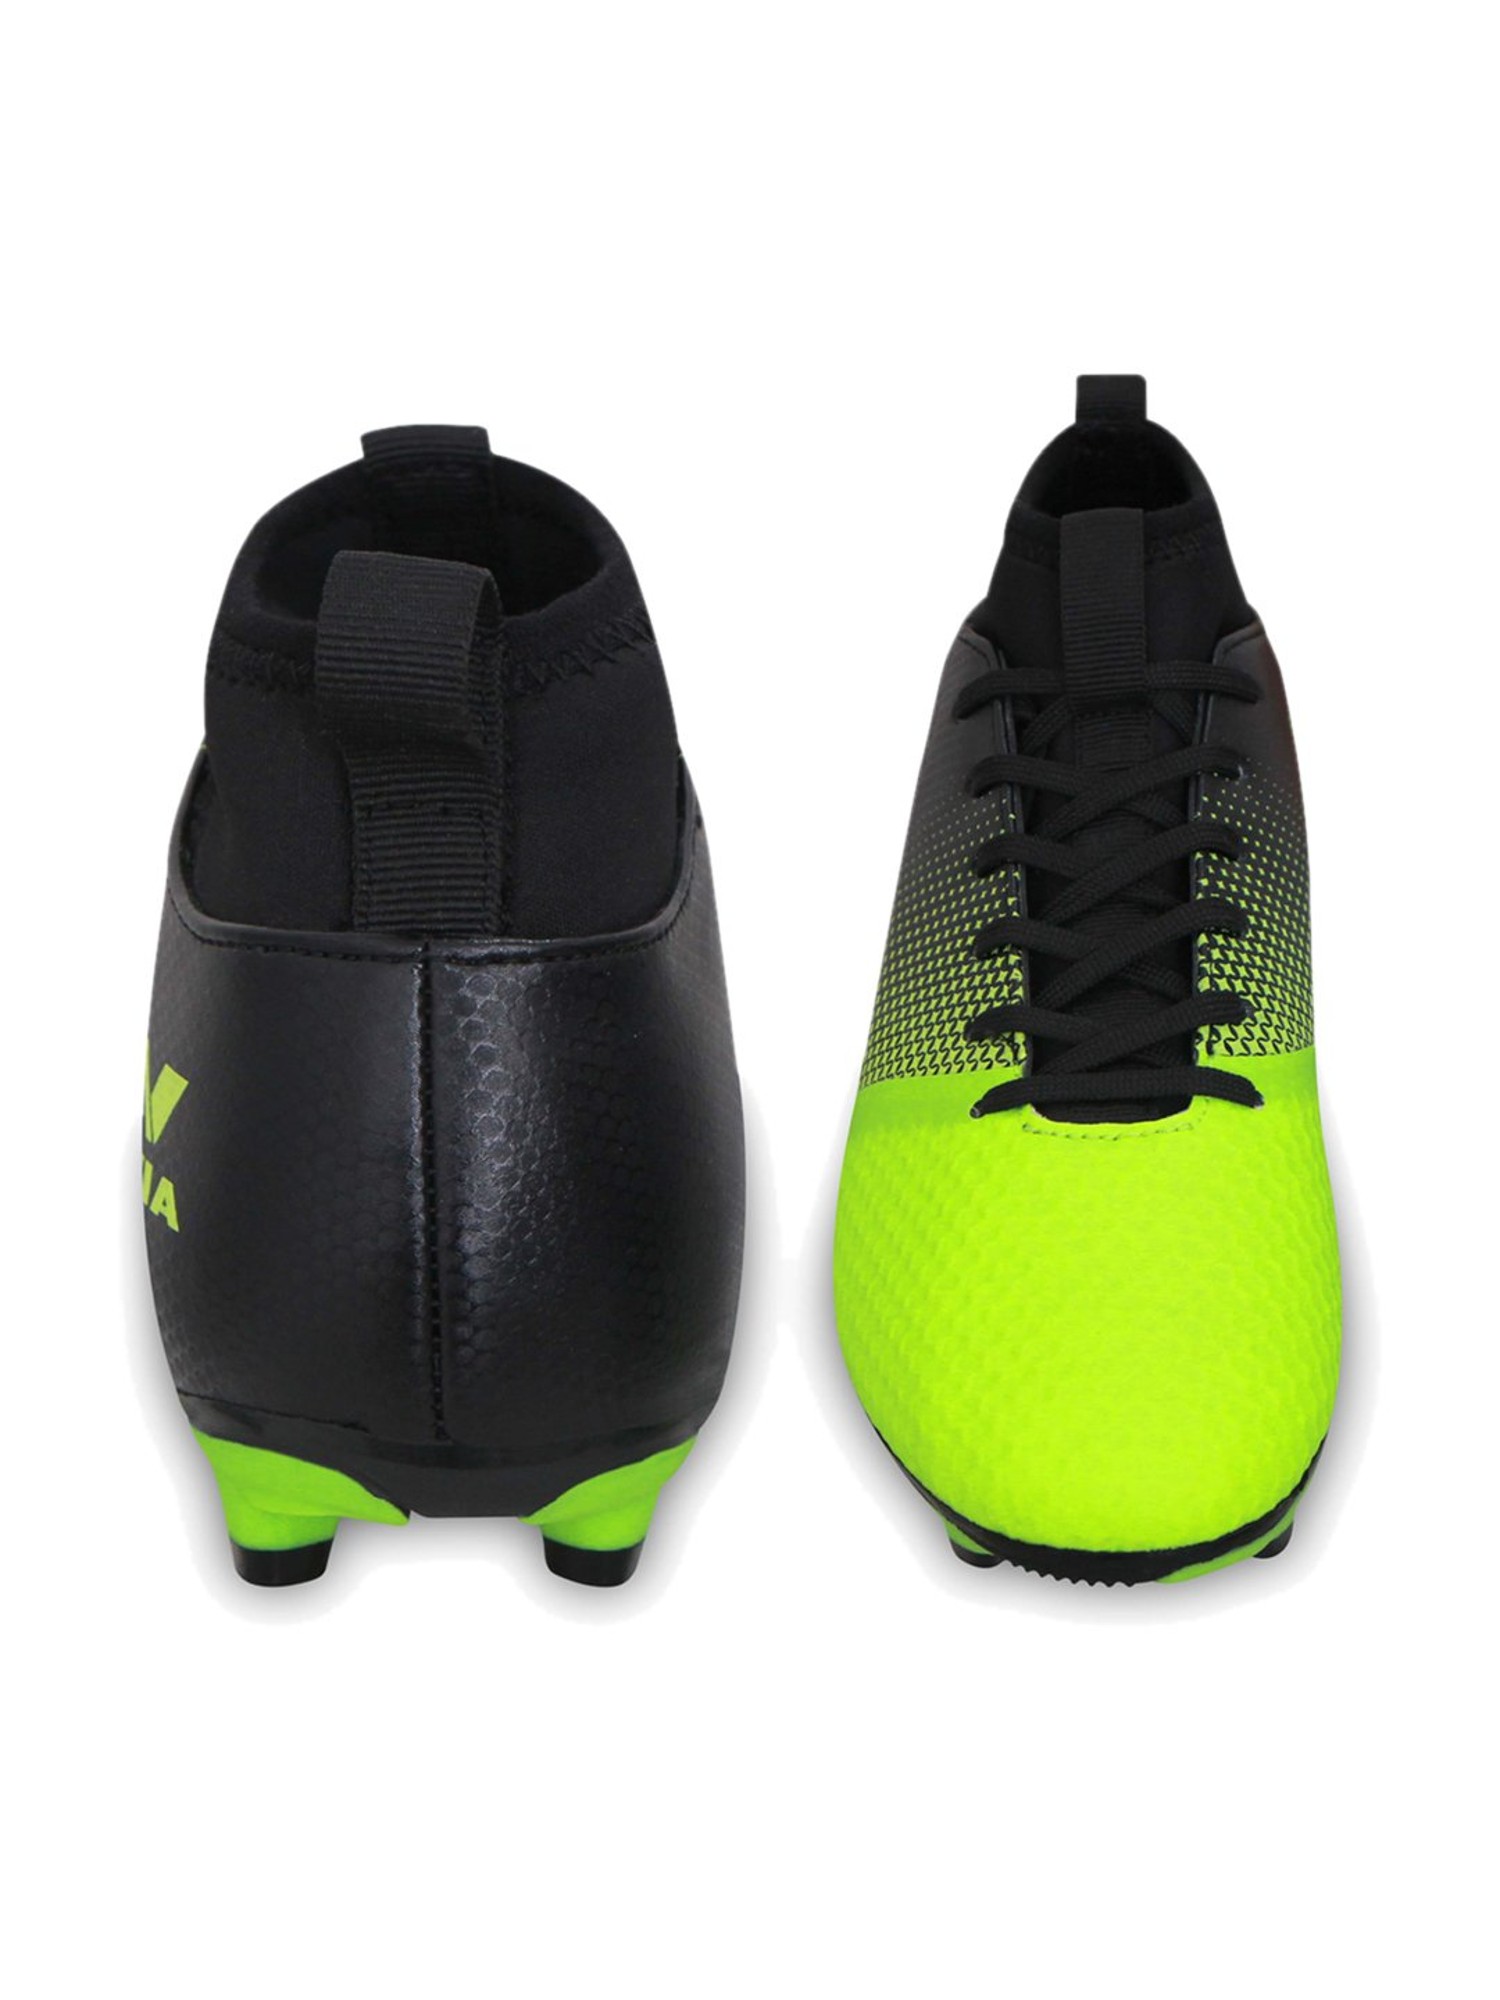 Buy Nivia Ashtang Studds & Black Football Shoes for Men at Price @ CLiQ